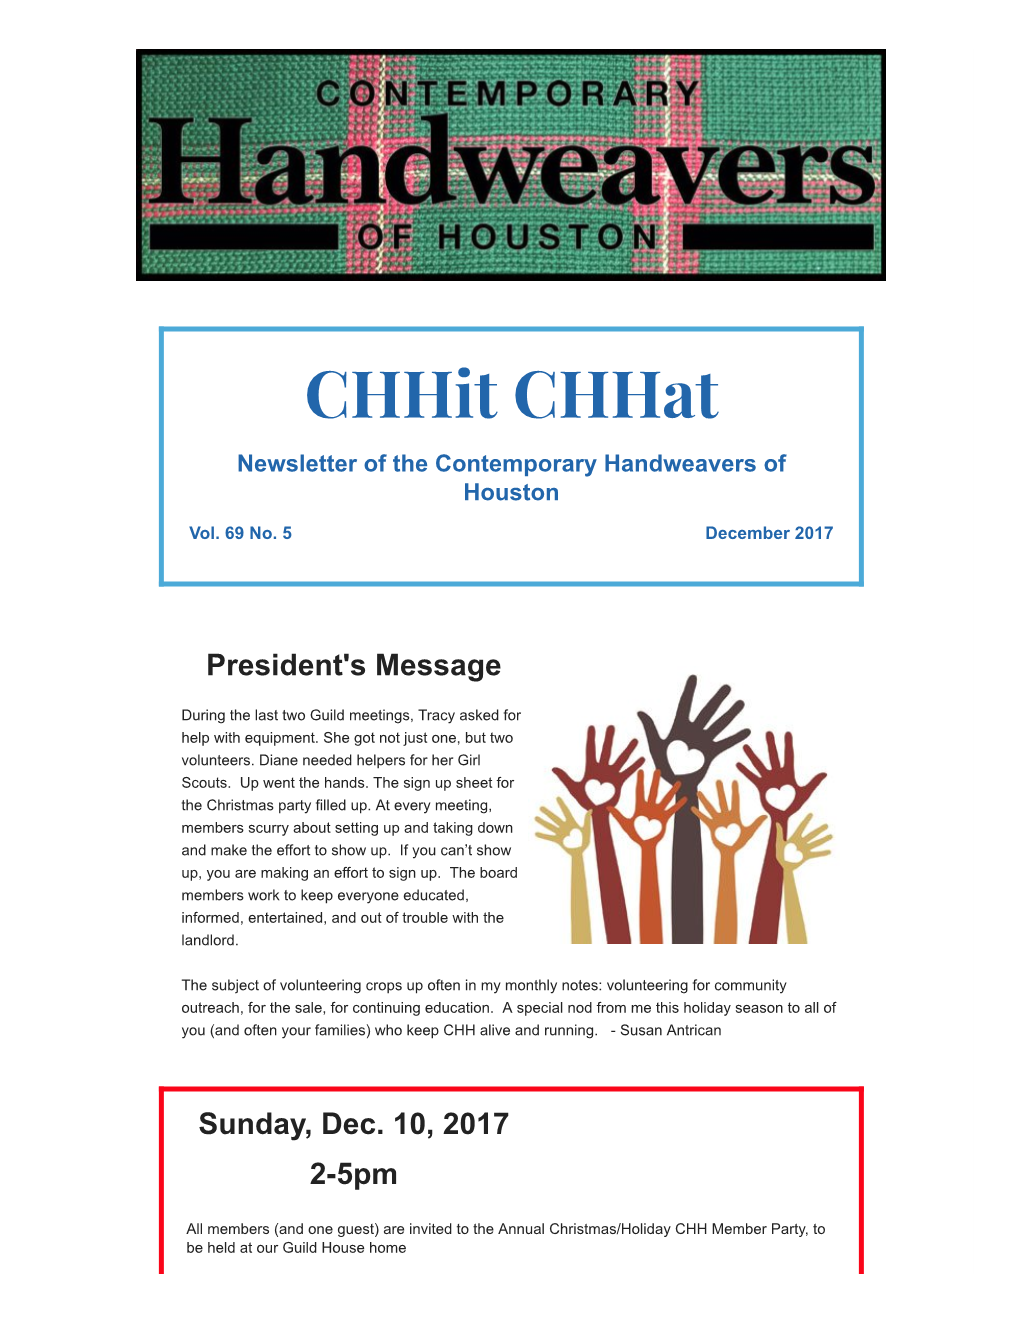 Chhit Chhat Newsletter of the Contemporary Handweavers of Houston